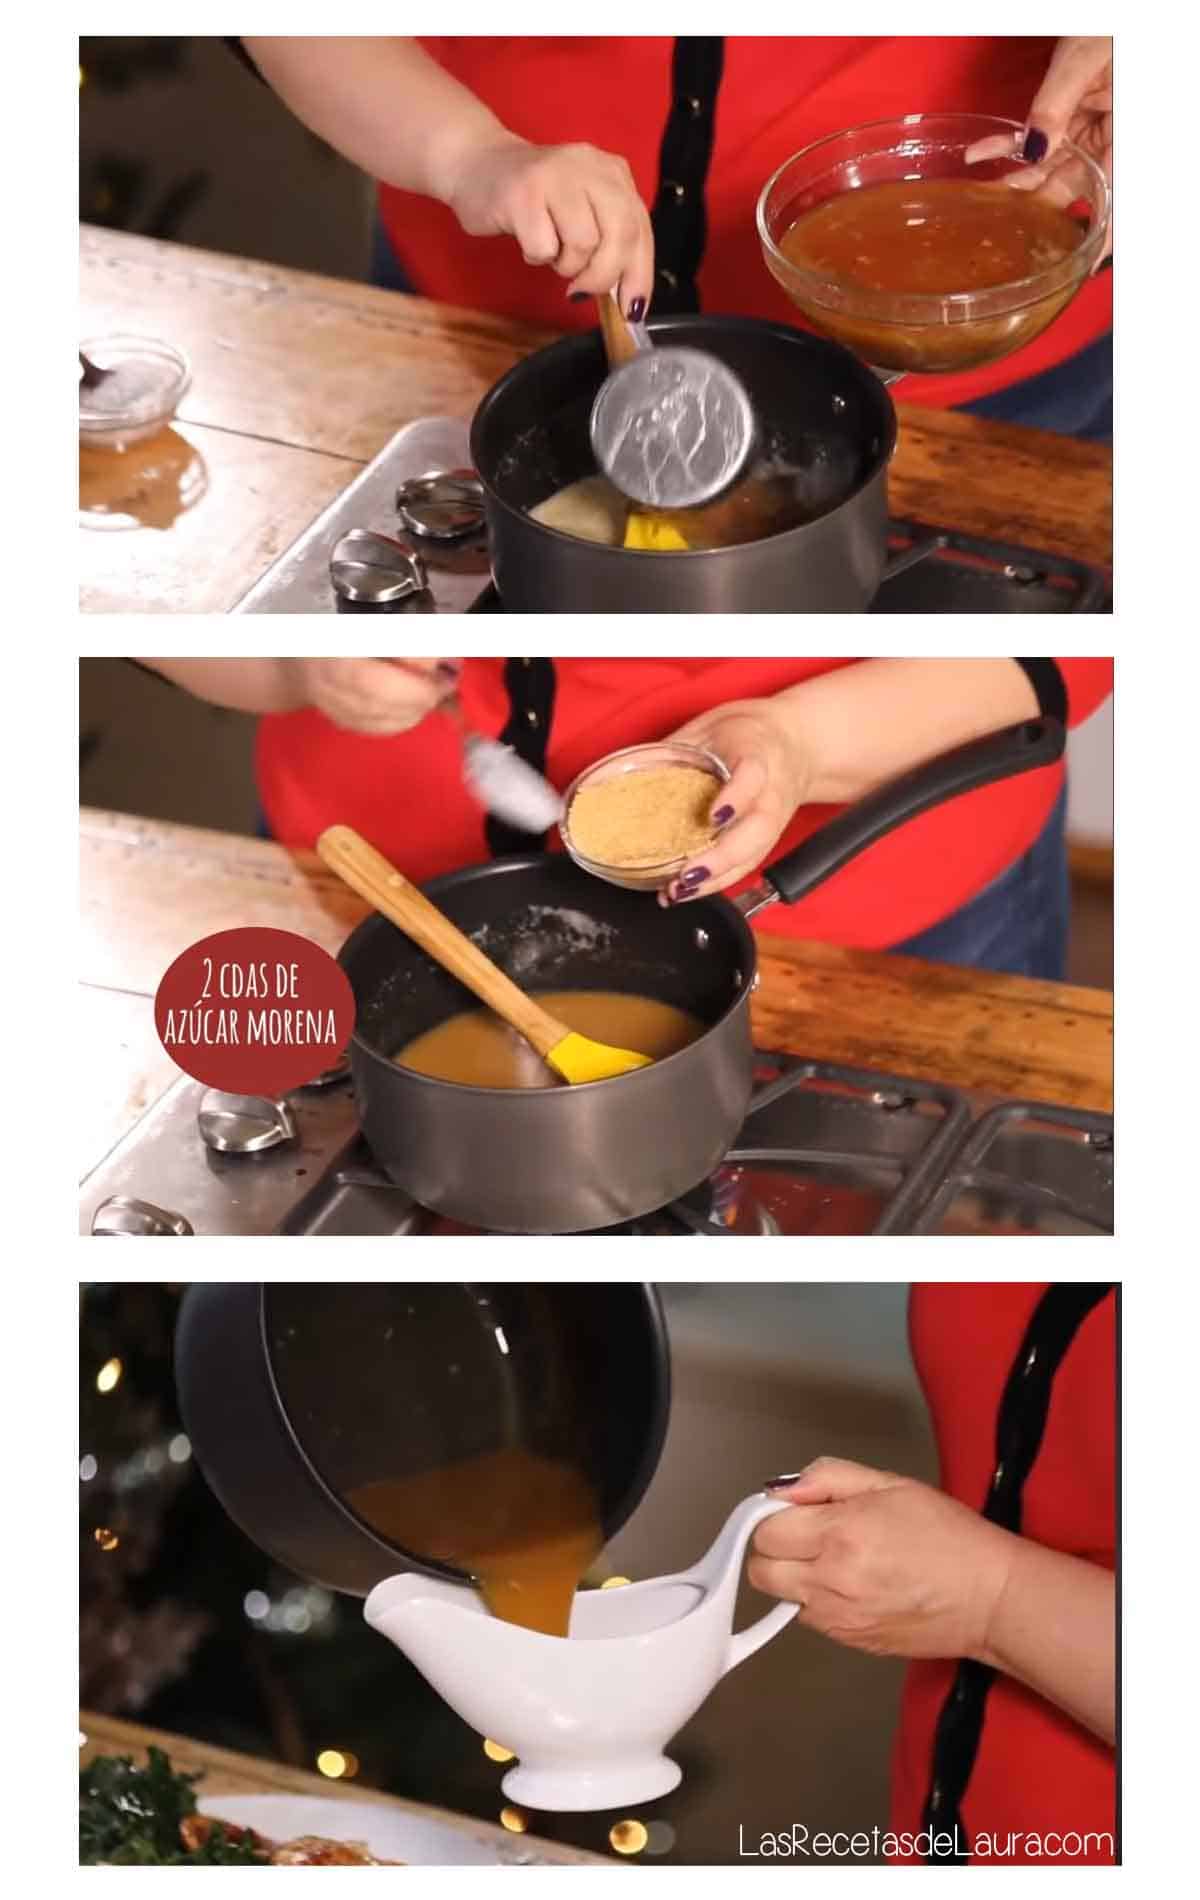 second image of process 2 homemade gravy  